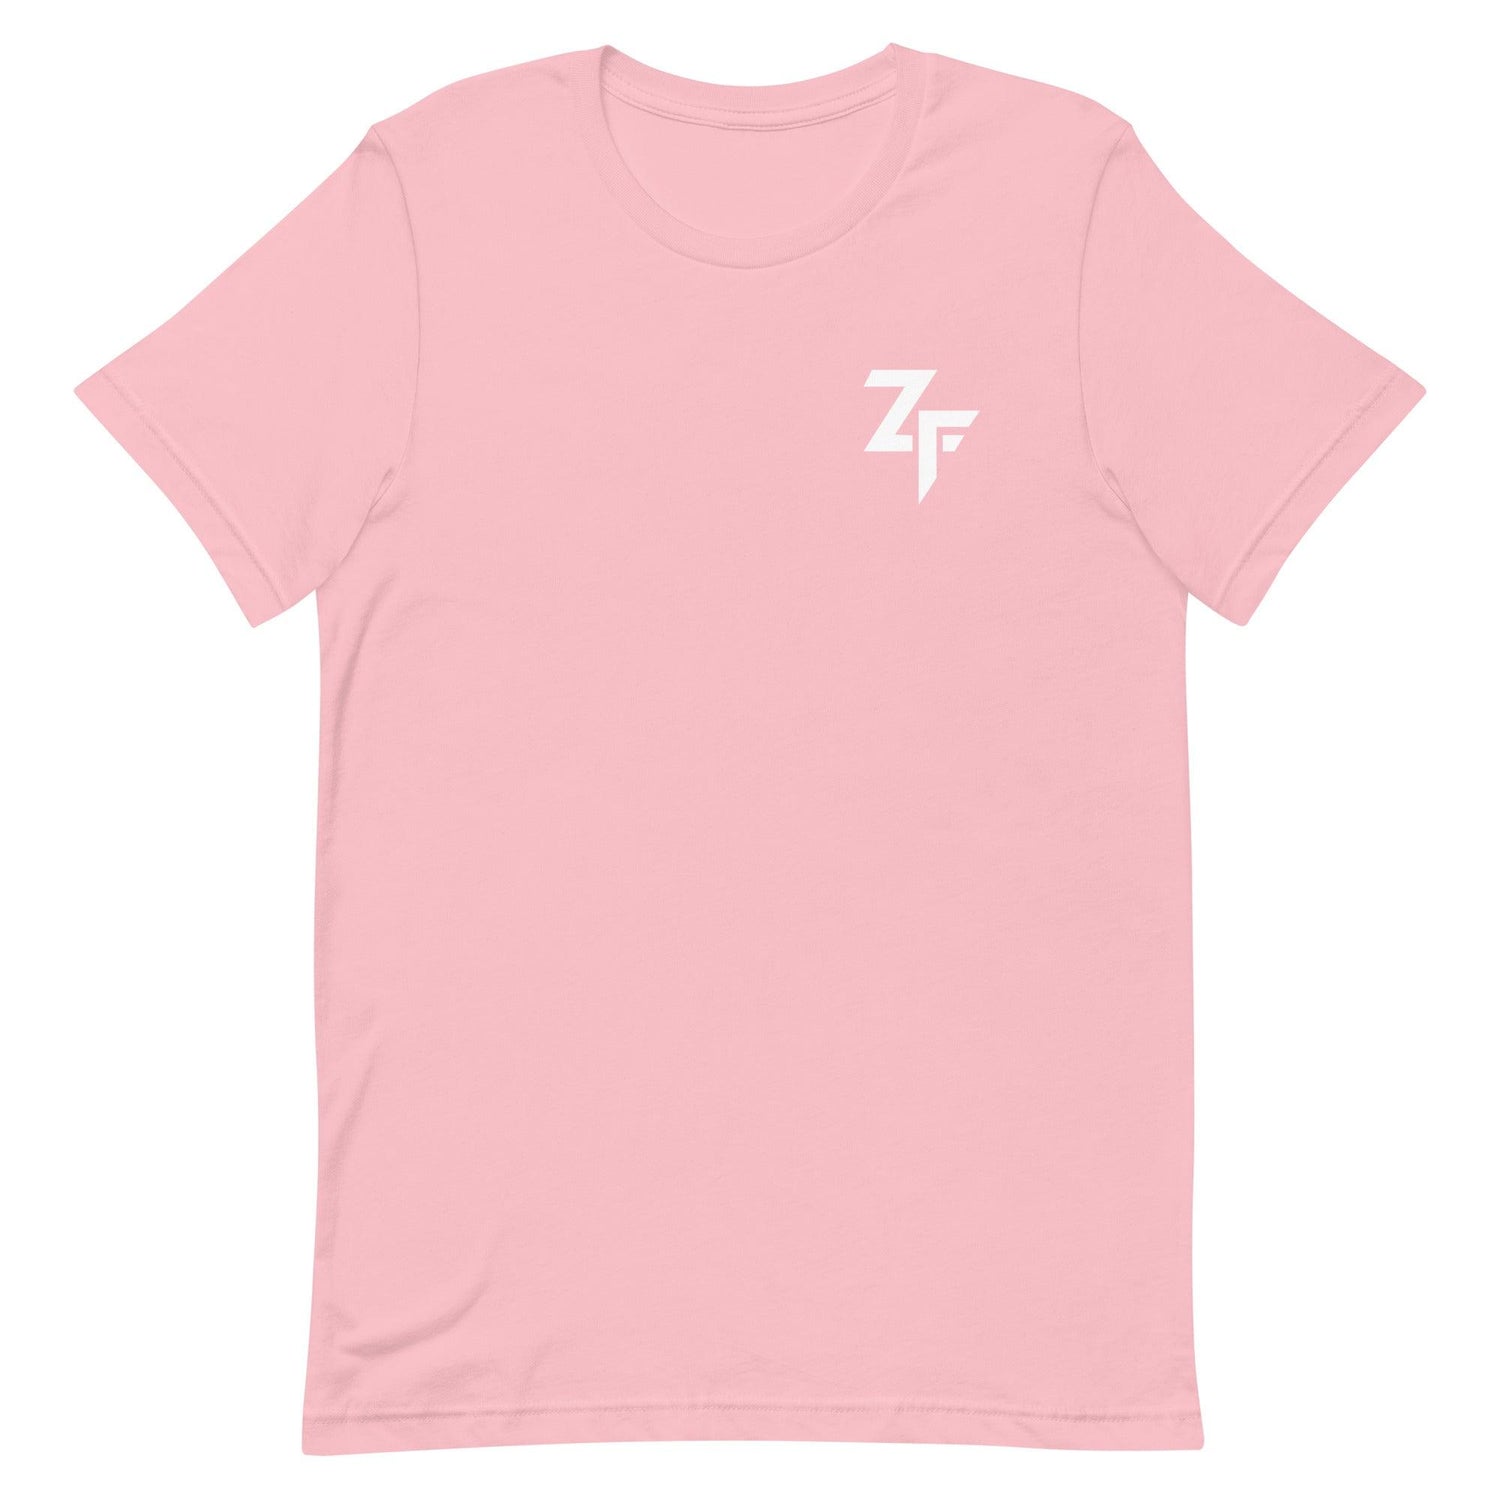 Zakhari Franklin "ZF" t-shirt - Fan Arch